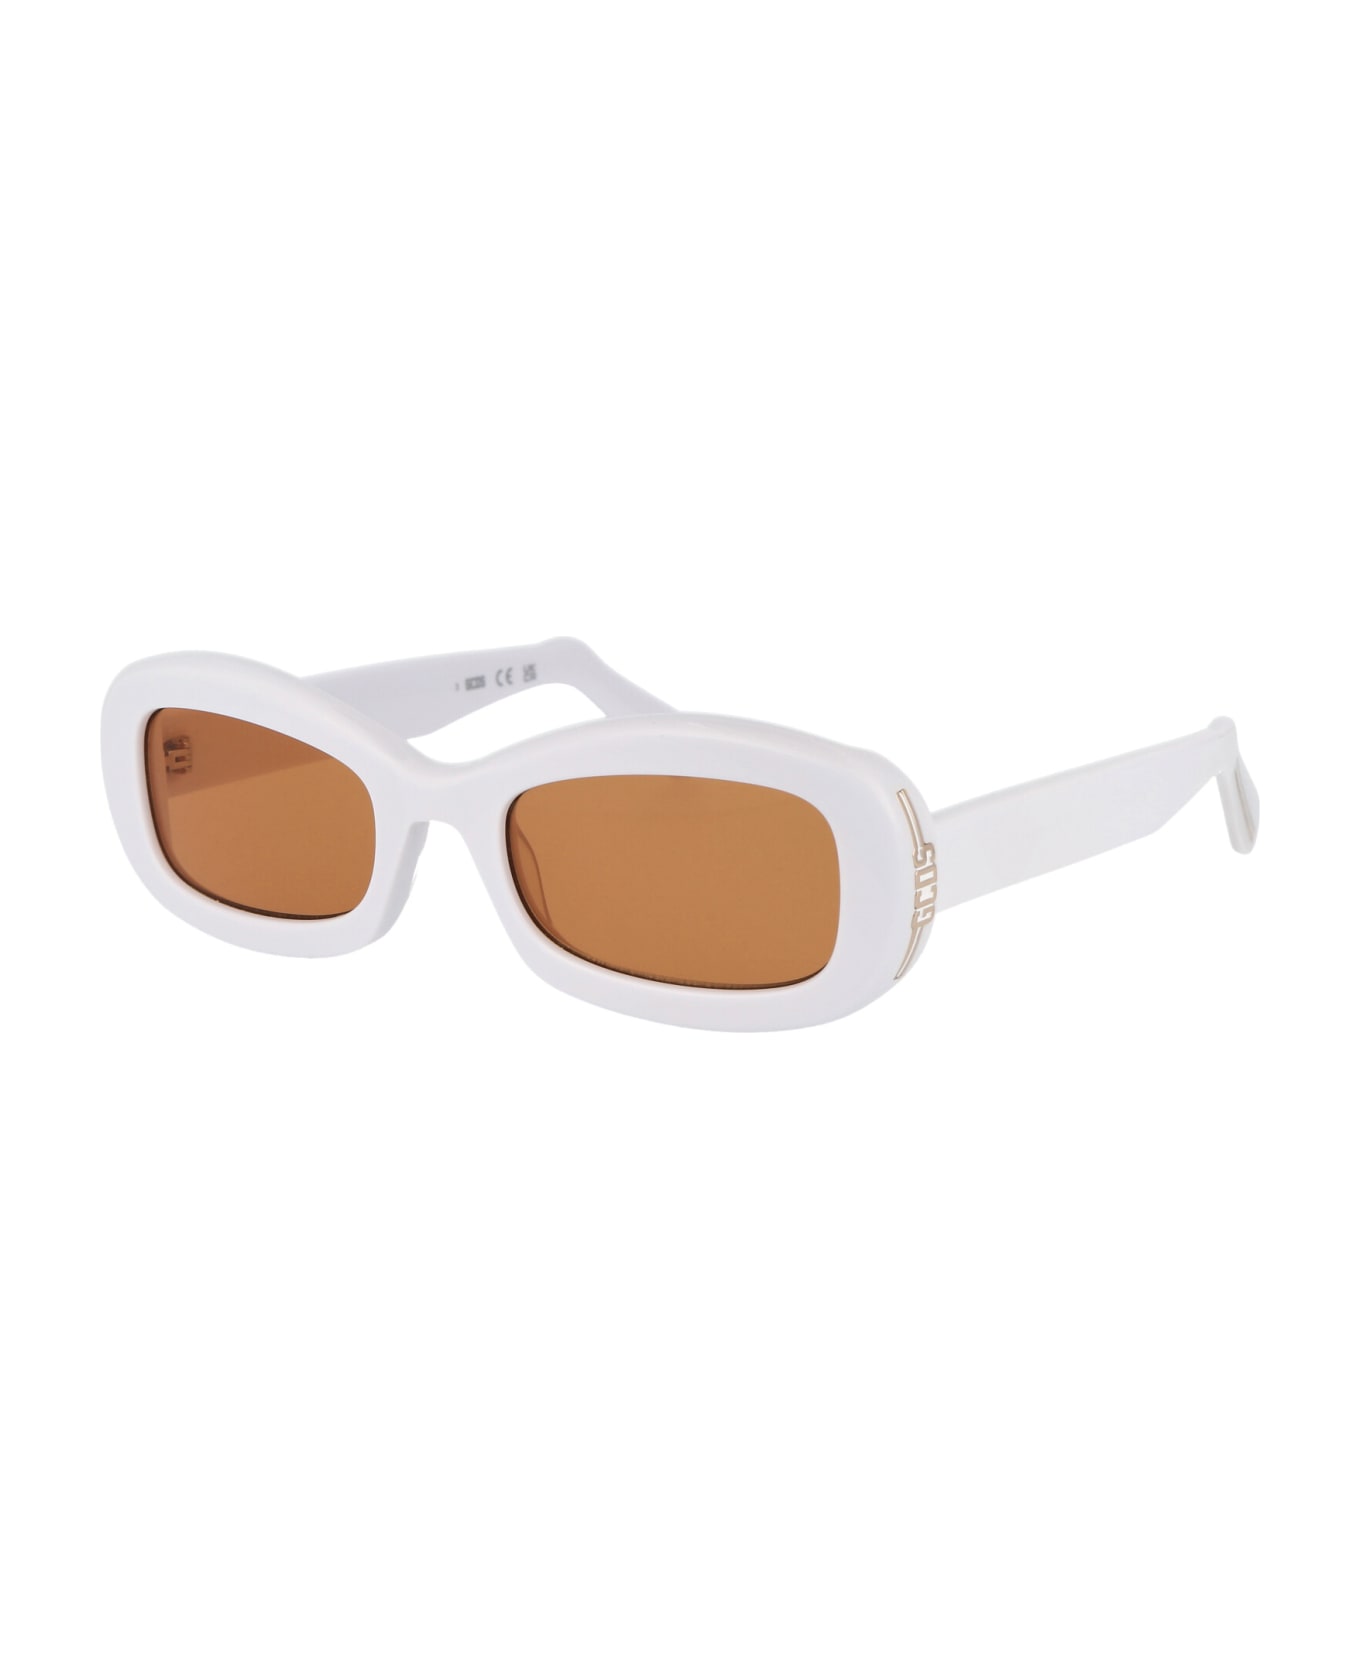 GCDS Gd0027 Sunglasses - 21E Bianco/Marrone サングラス